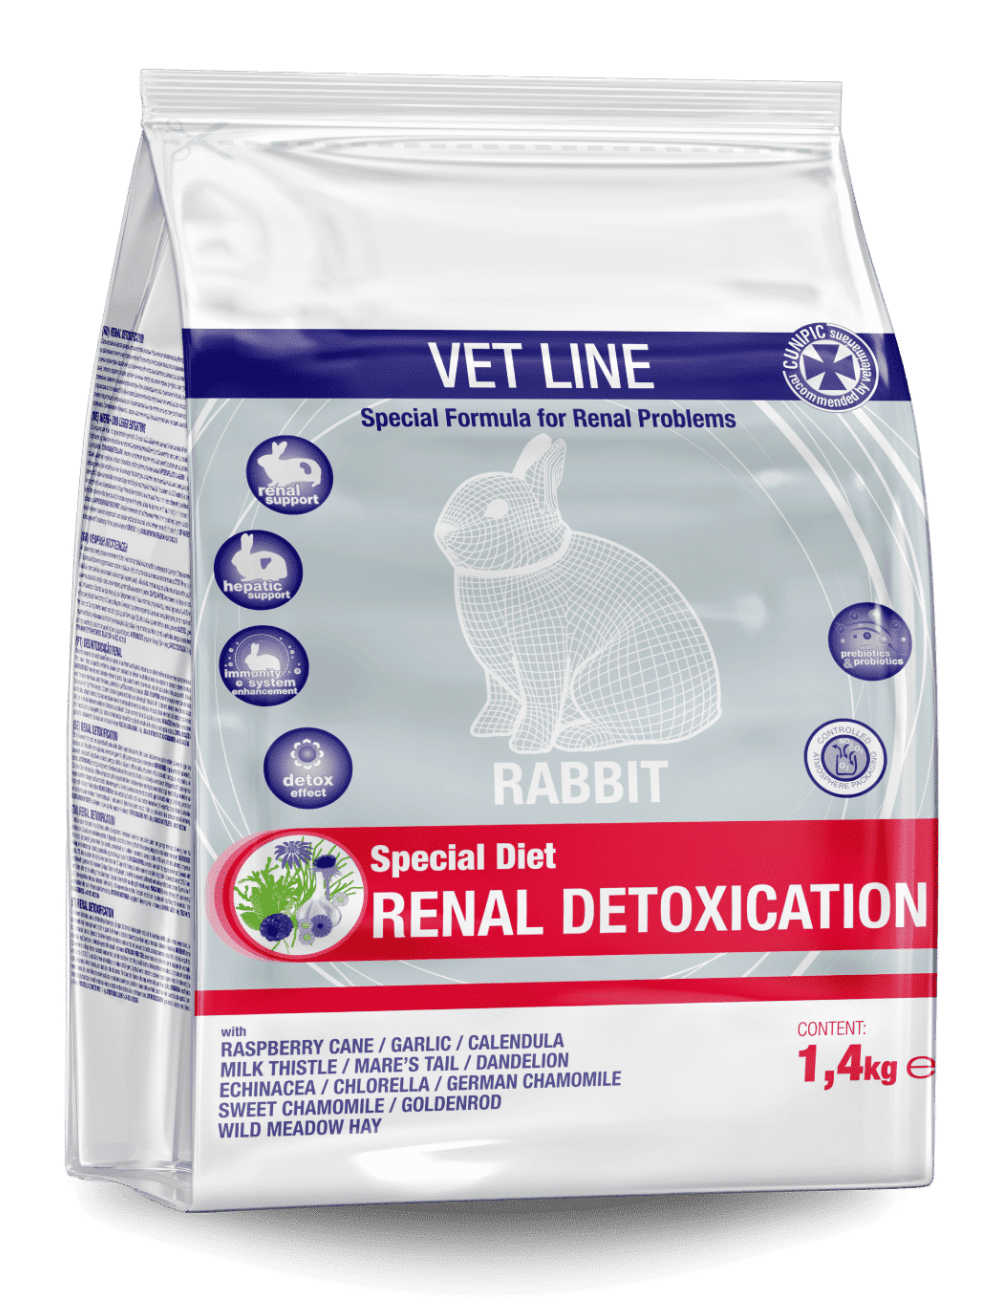 CUNIPIC - Vetline Rabbit Renal Detoxication